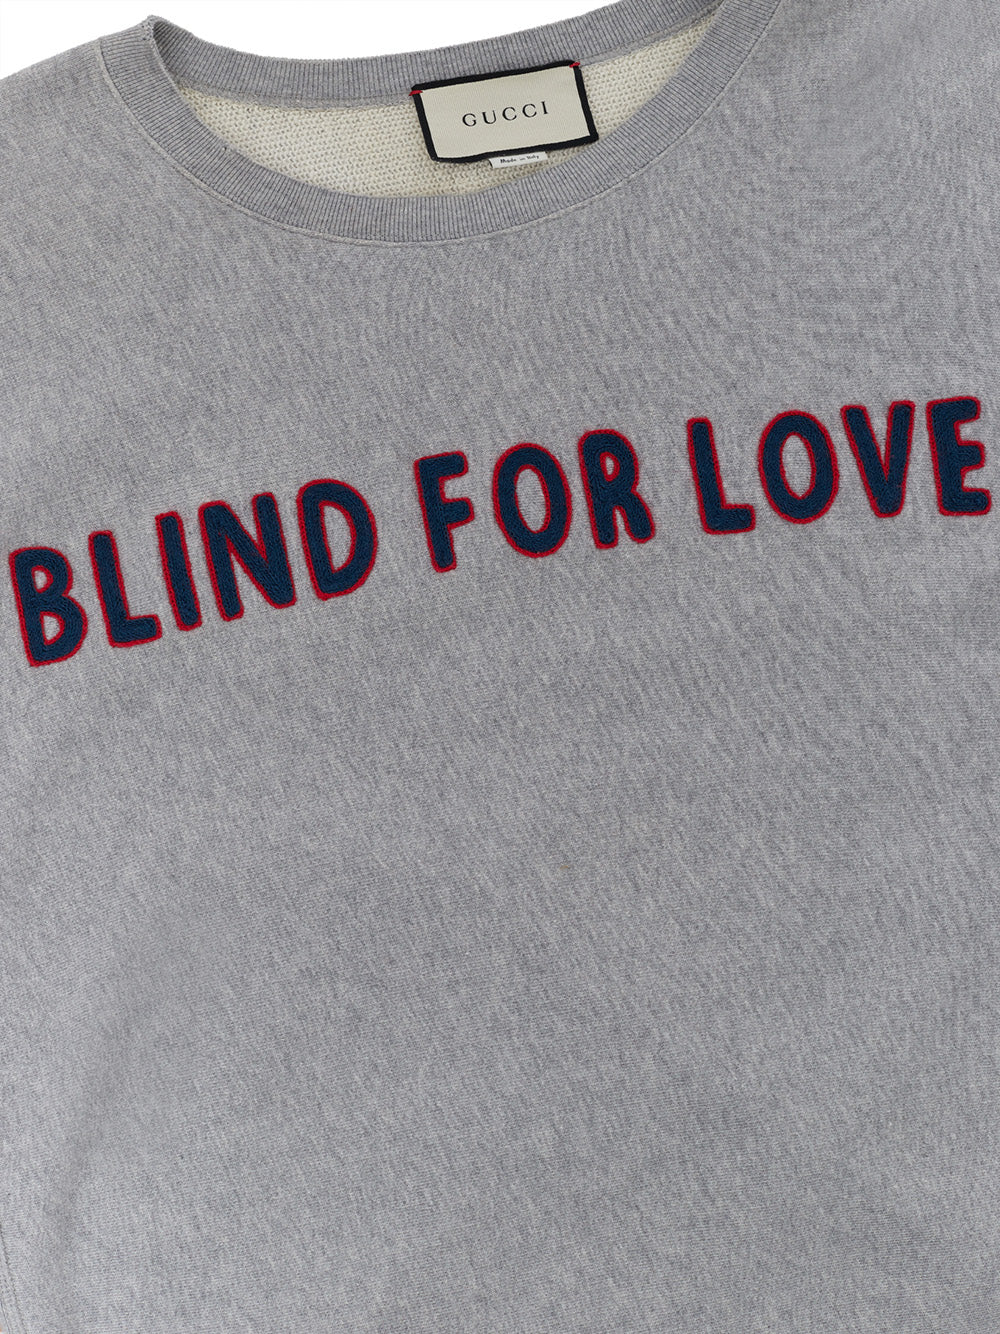 Felpa Gucci 'Blind For Love'